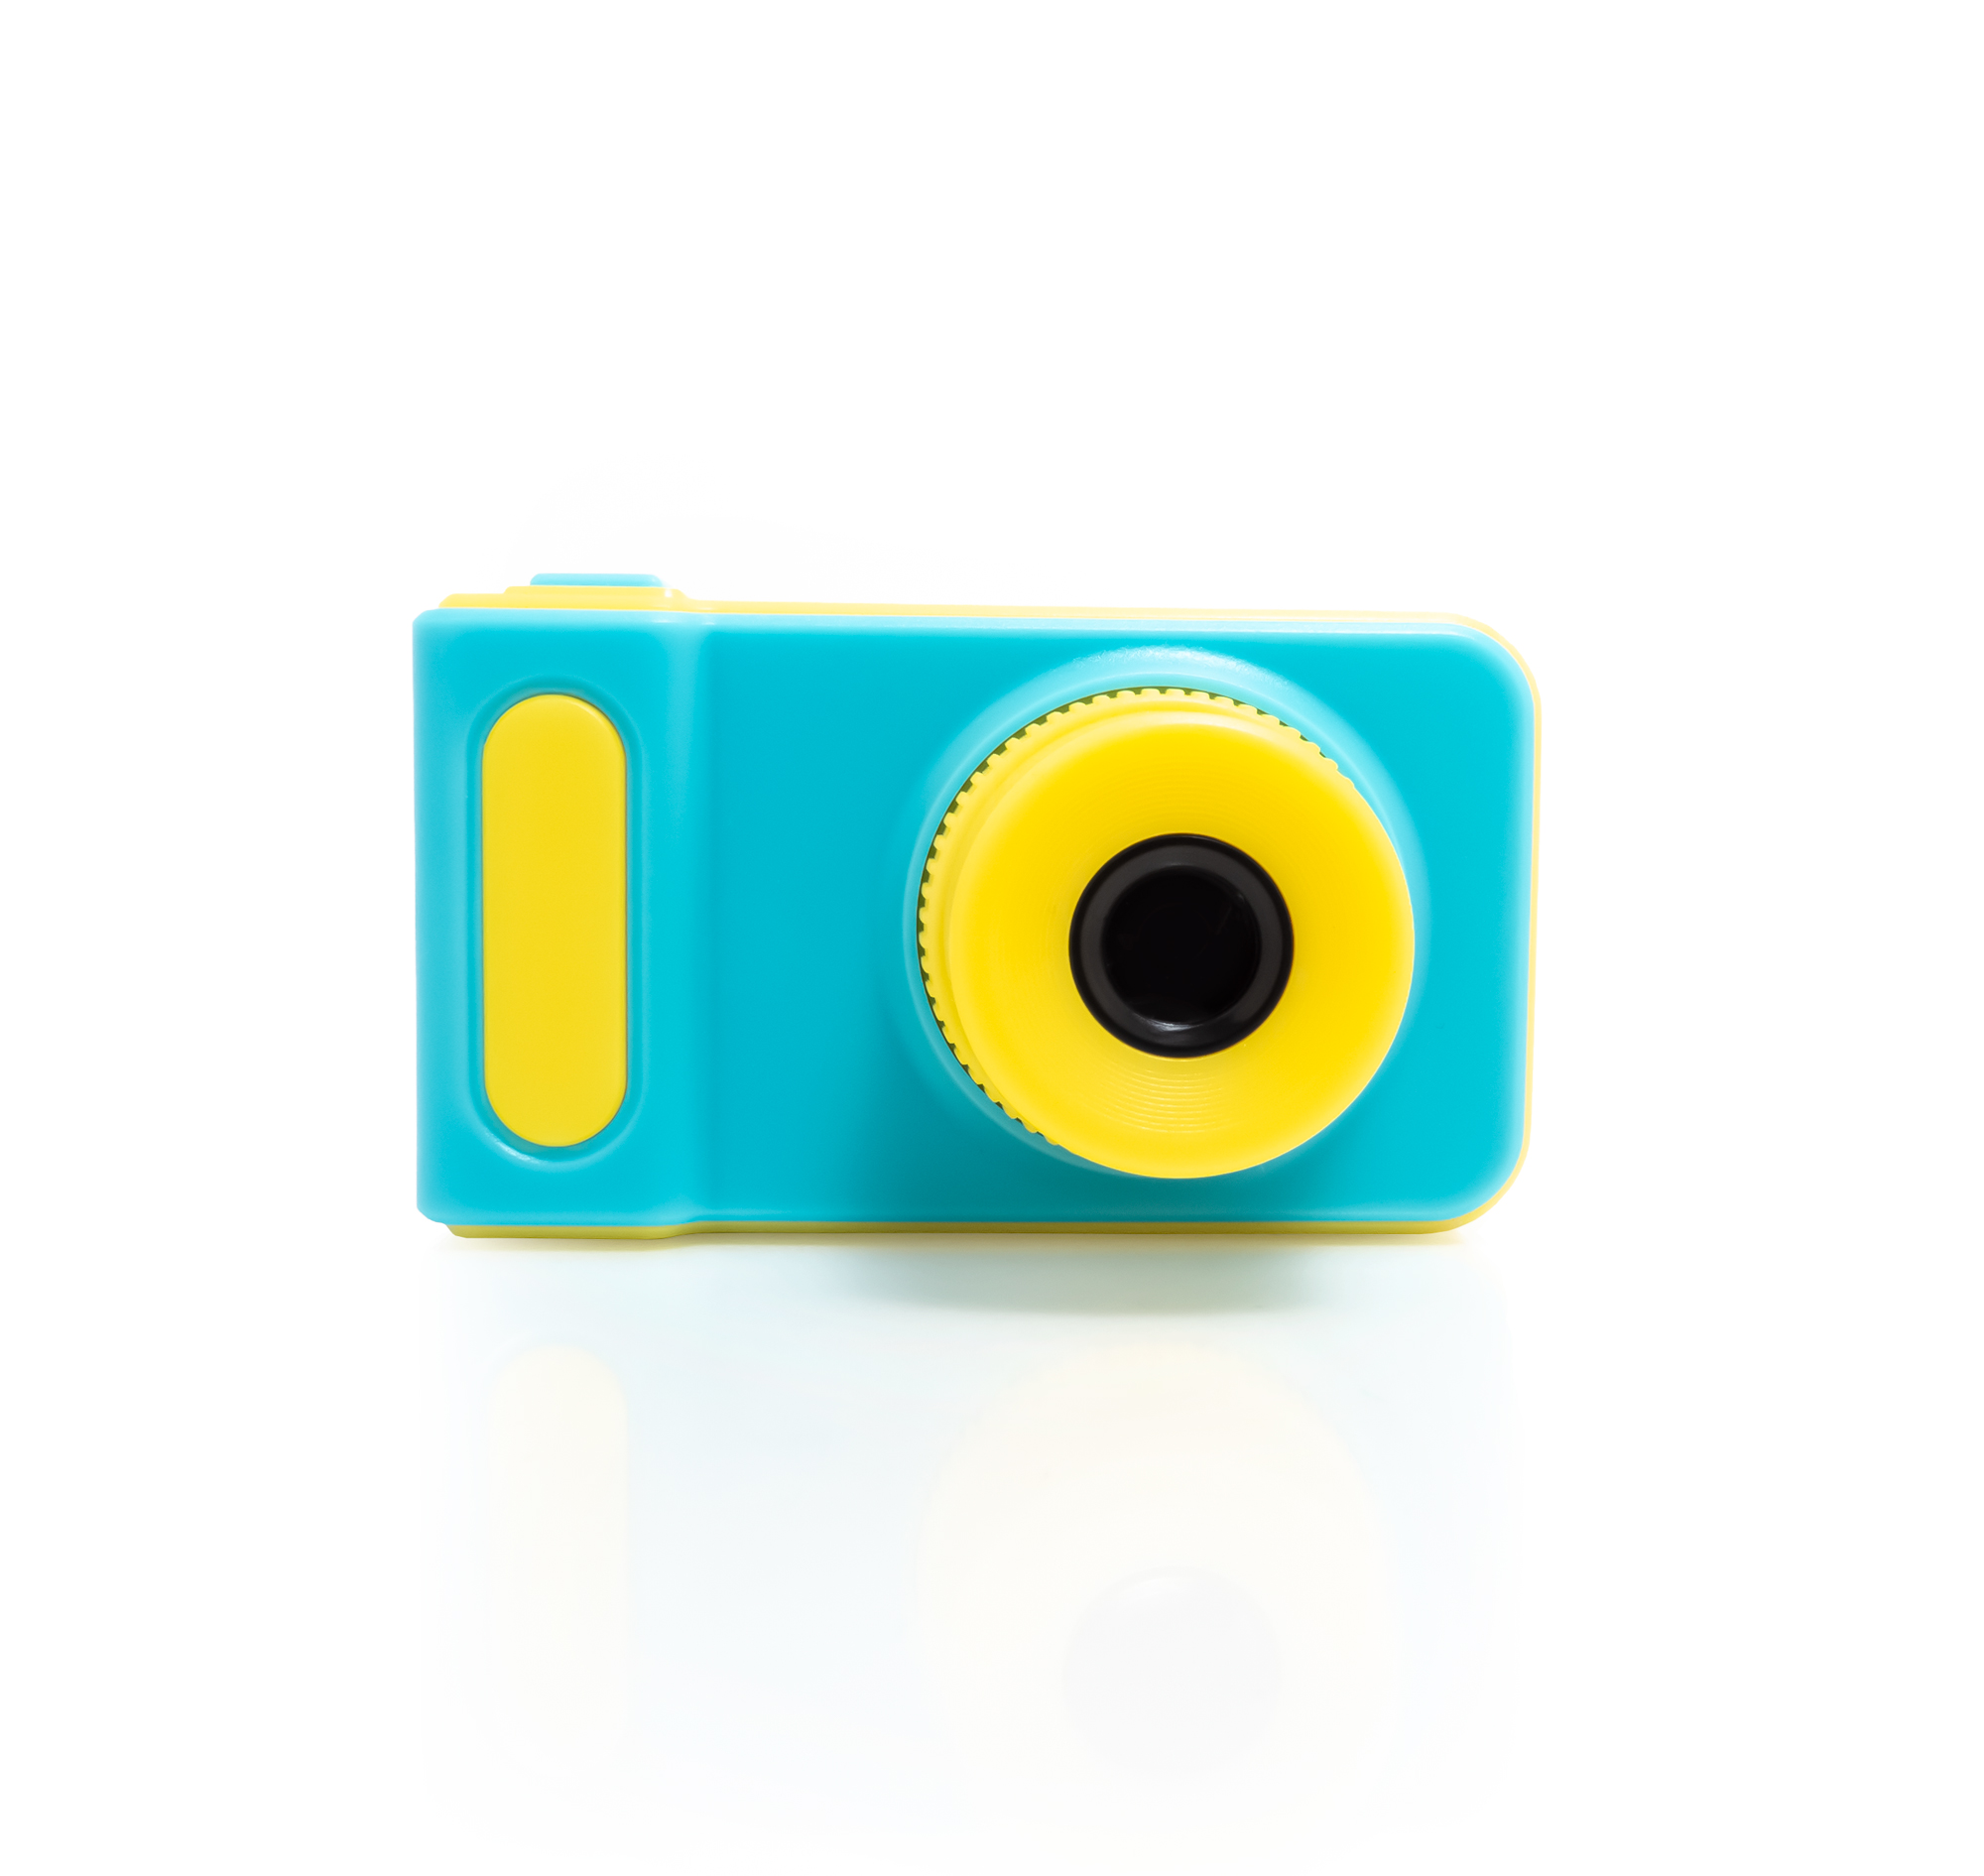 фотоаппарат детский пчелка голубой Фотоаппарат детский K5 голубой